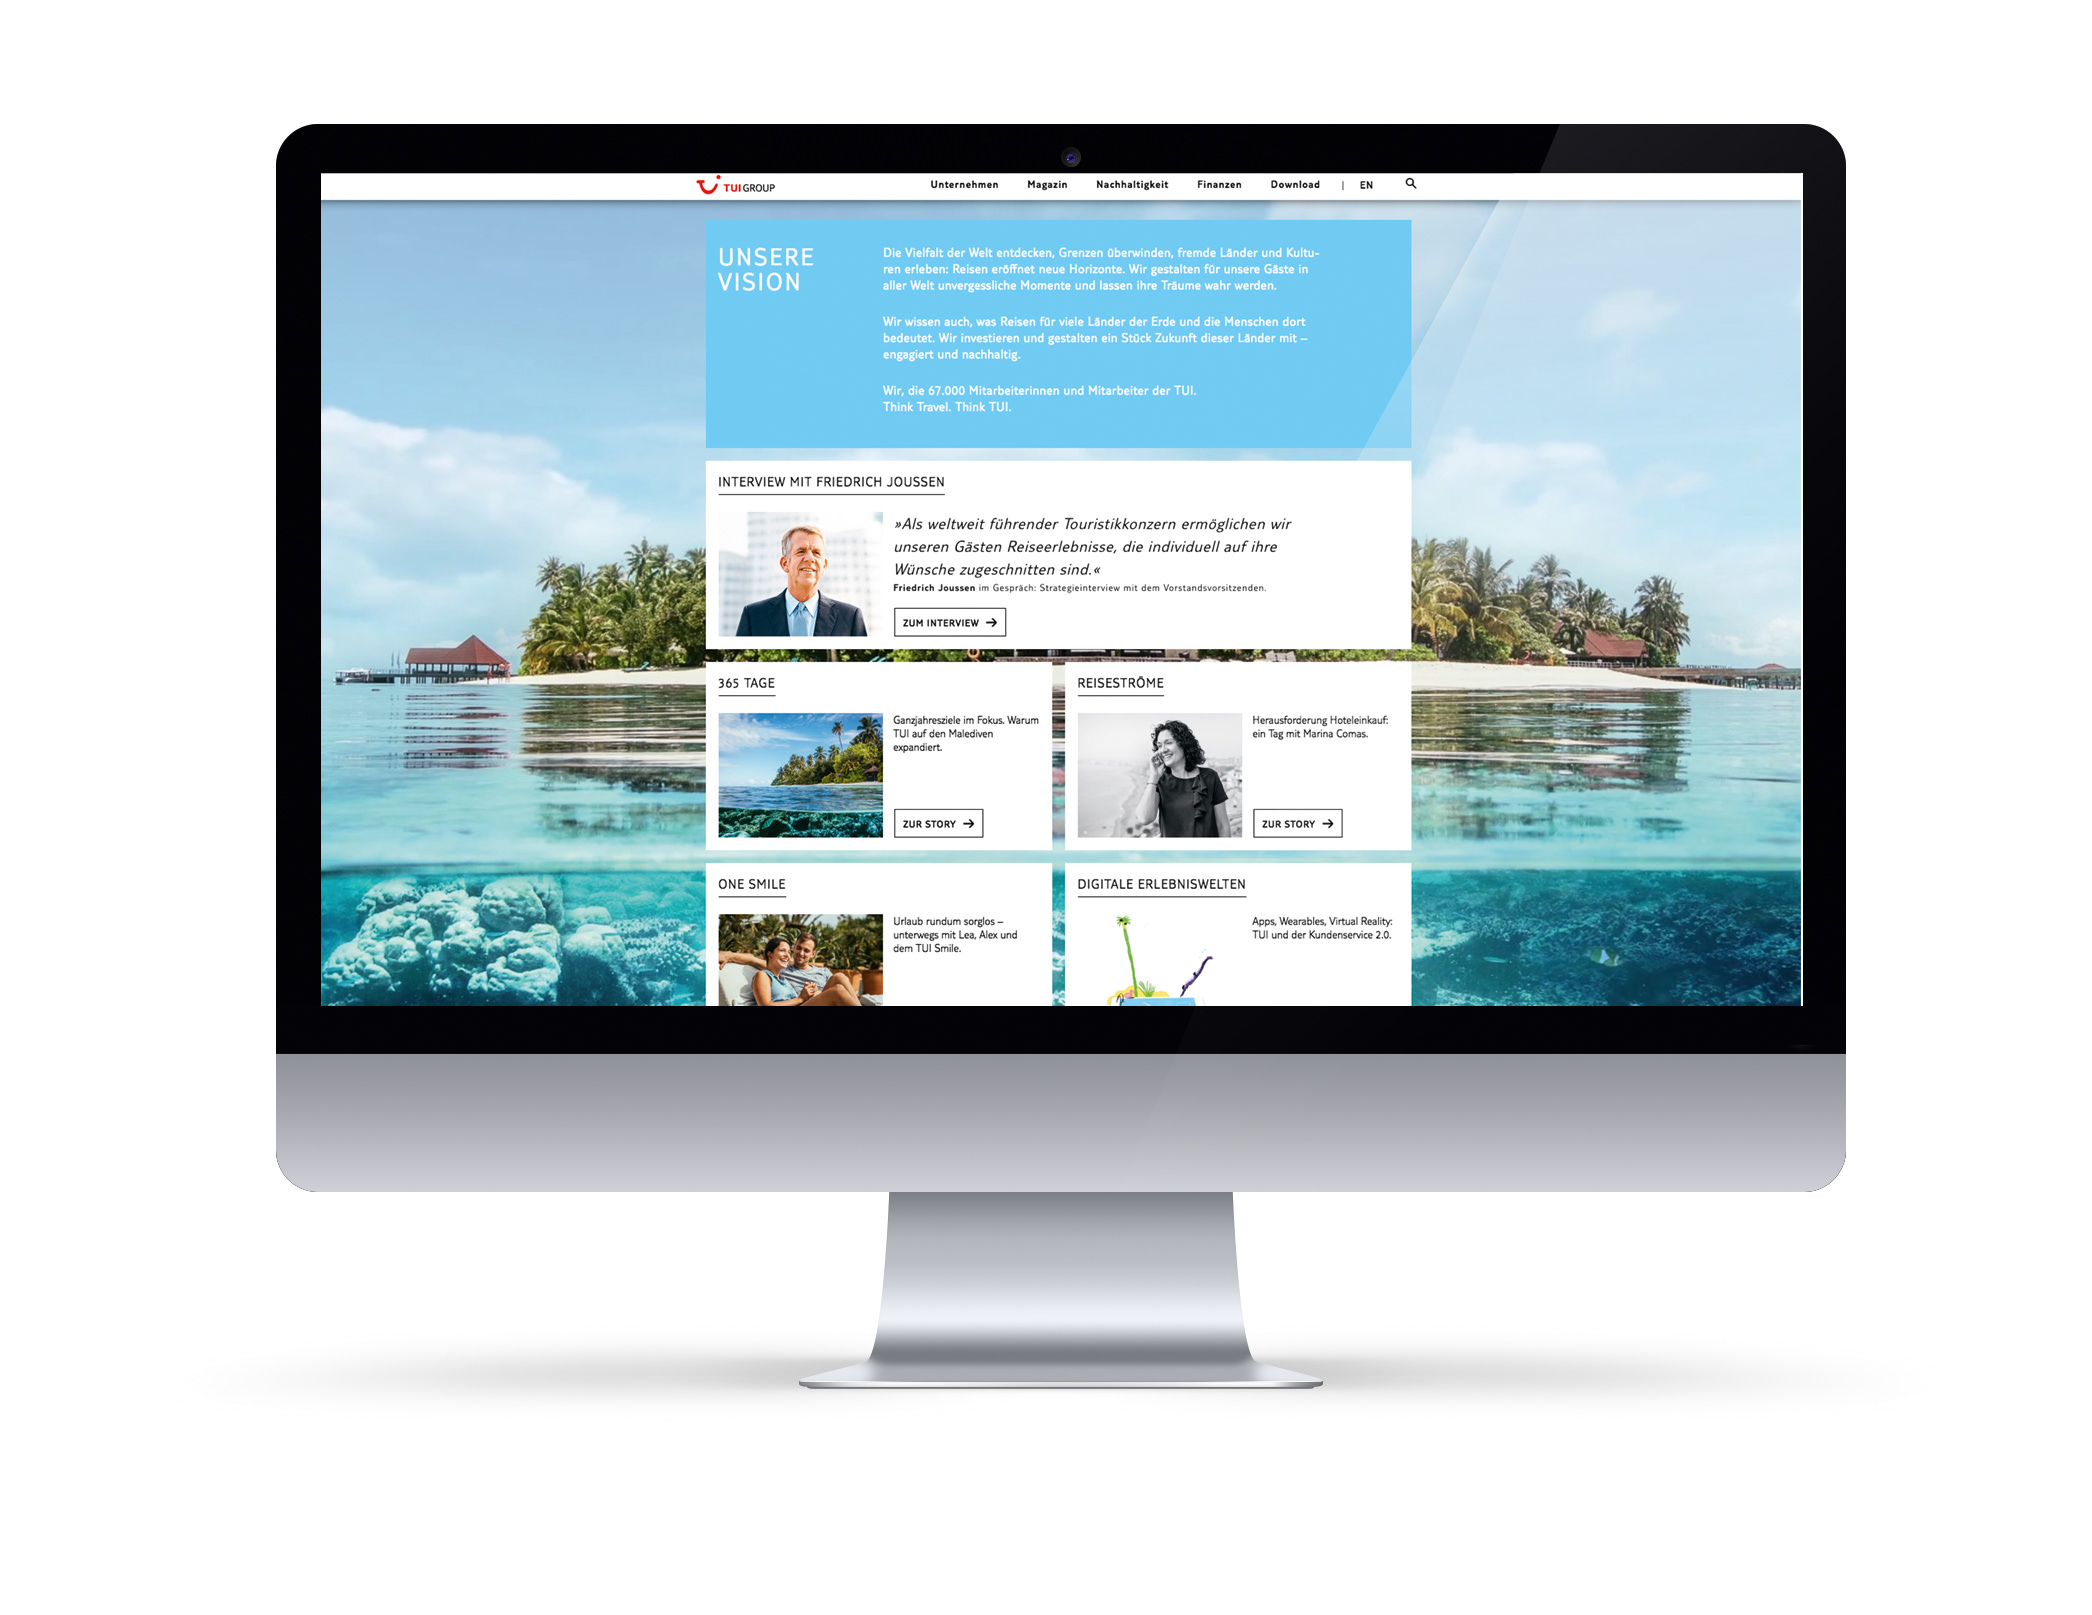 TUI途易旅游集团2015/2016交付主题年报网站设计